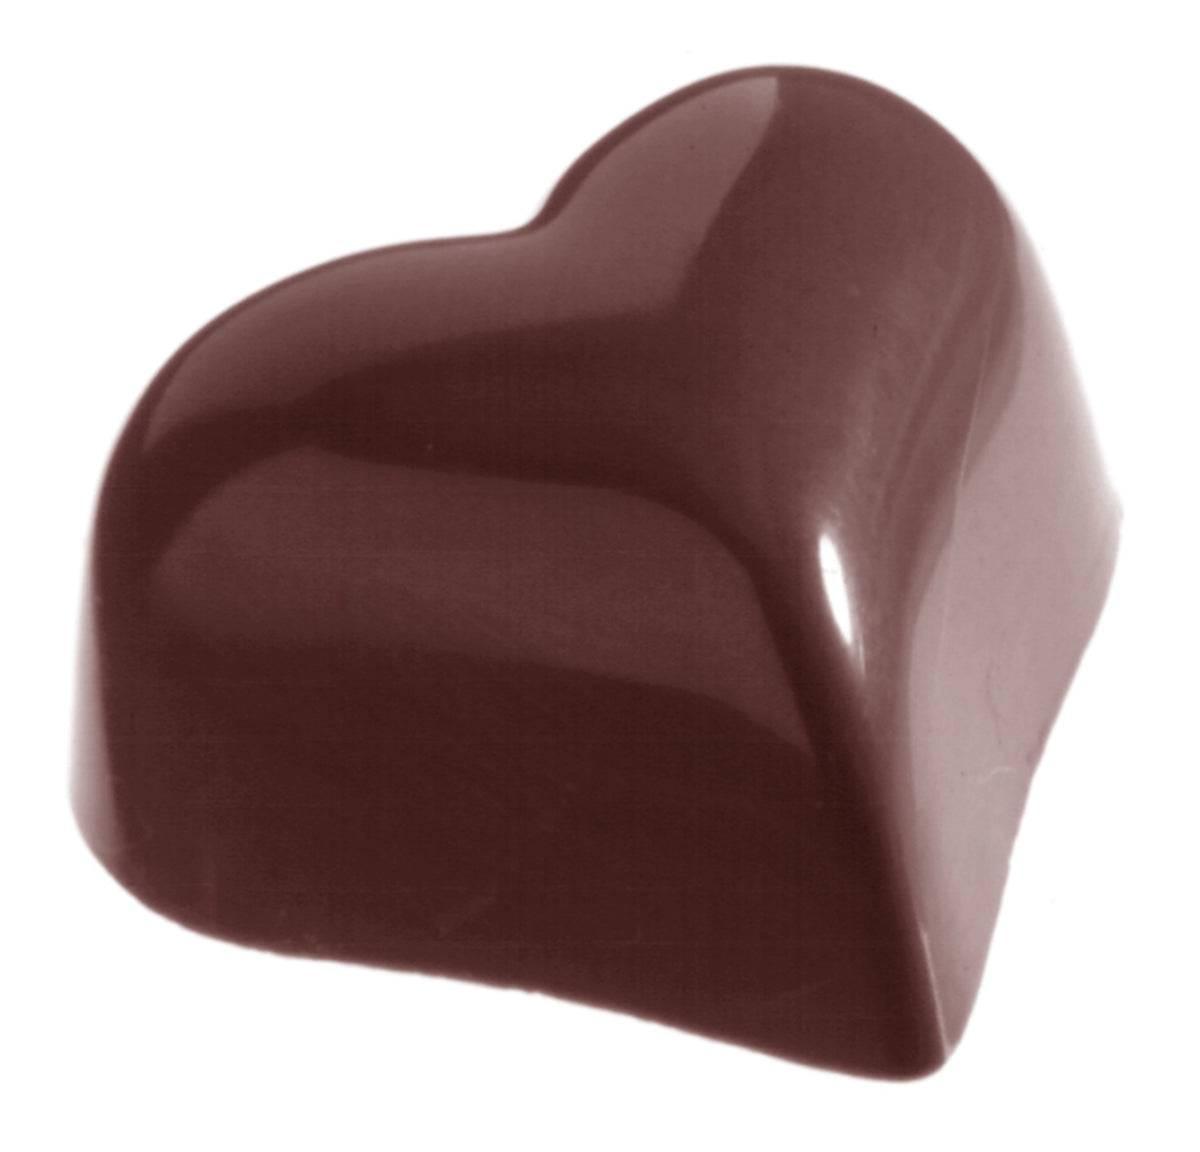 CHOCOLATE MOLD SMALL PUFFY HEART 9g CW1526 - Zucchero Canada